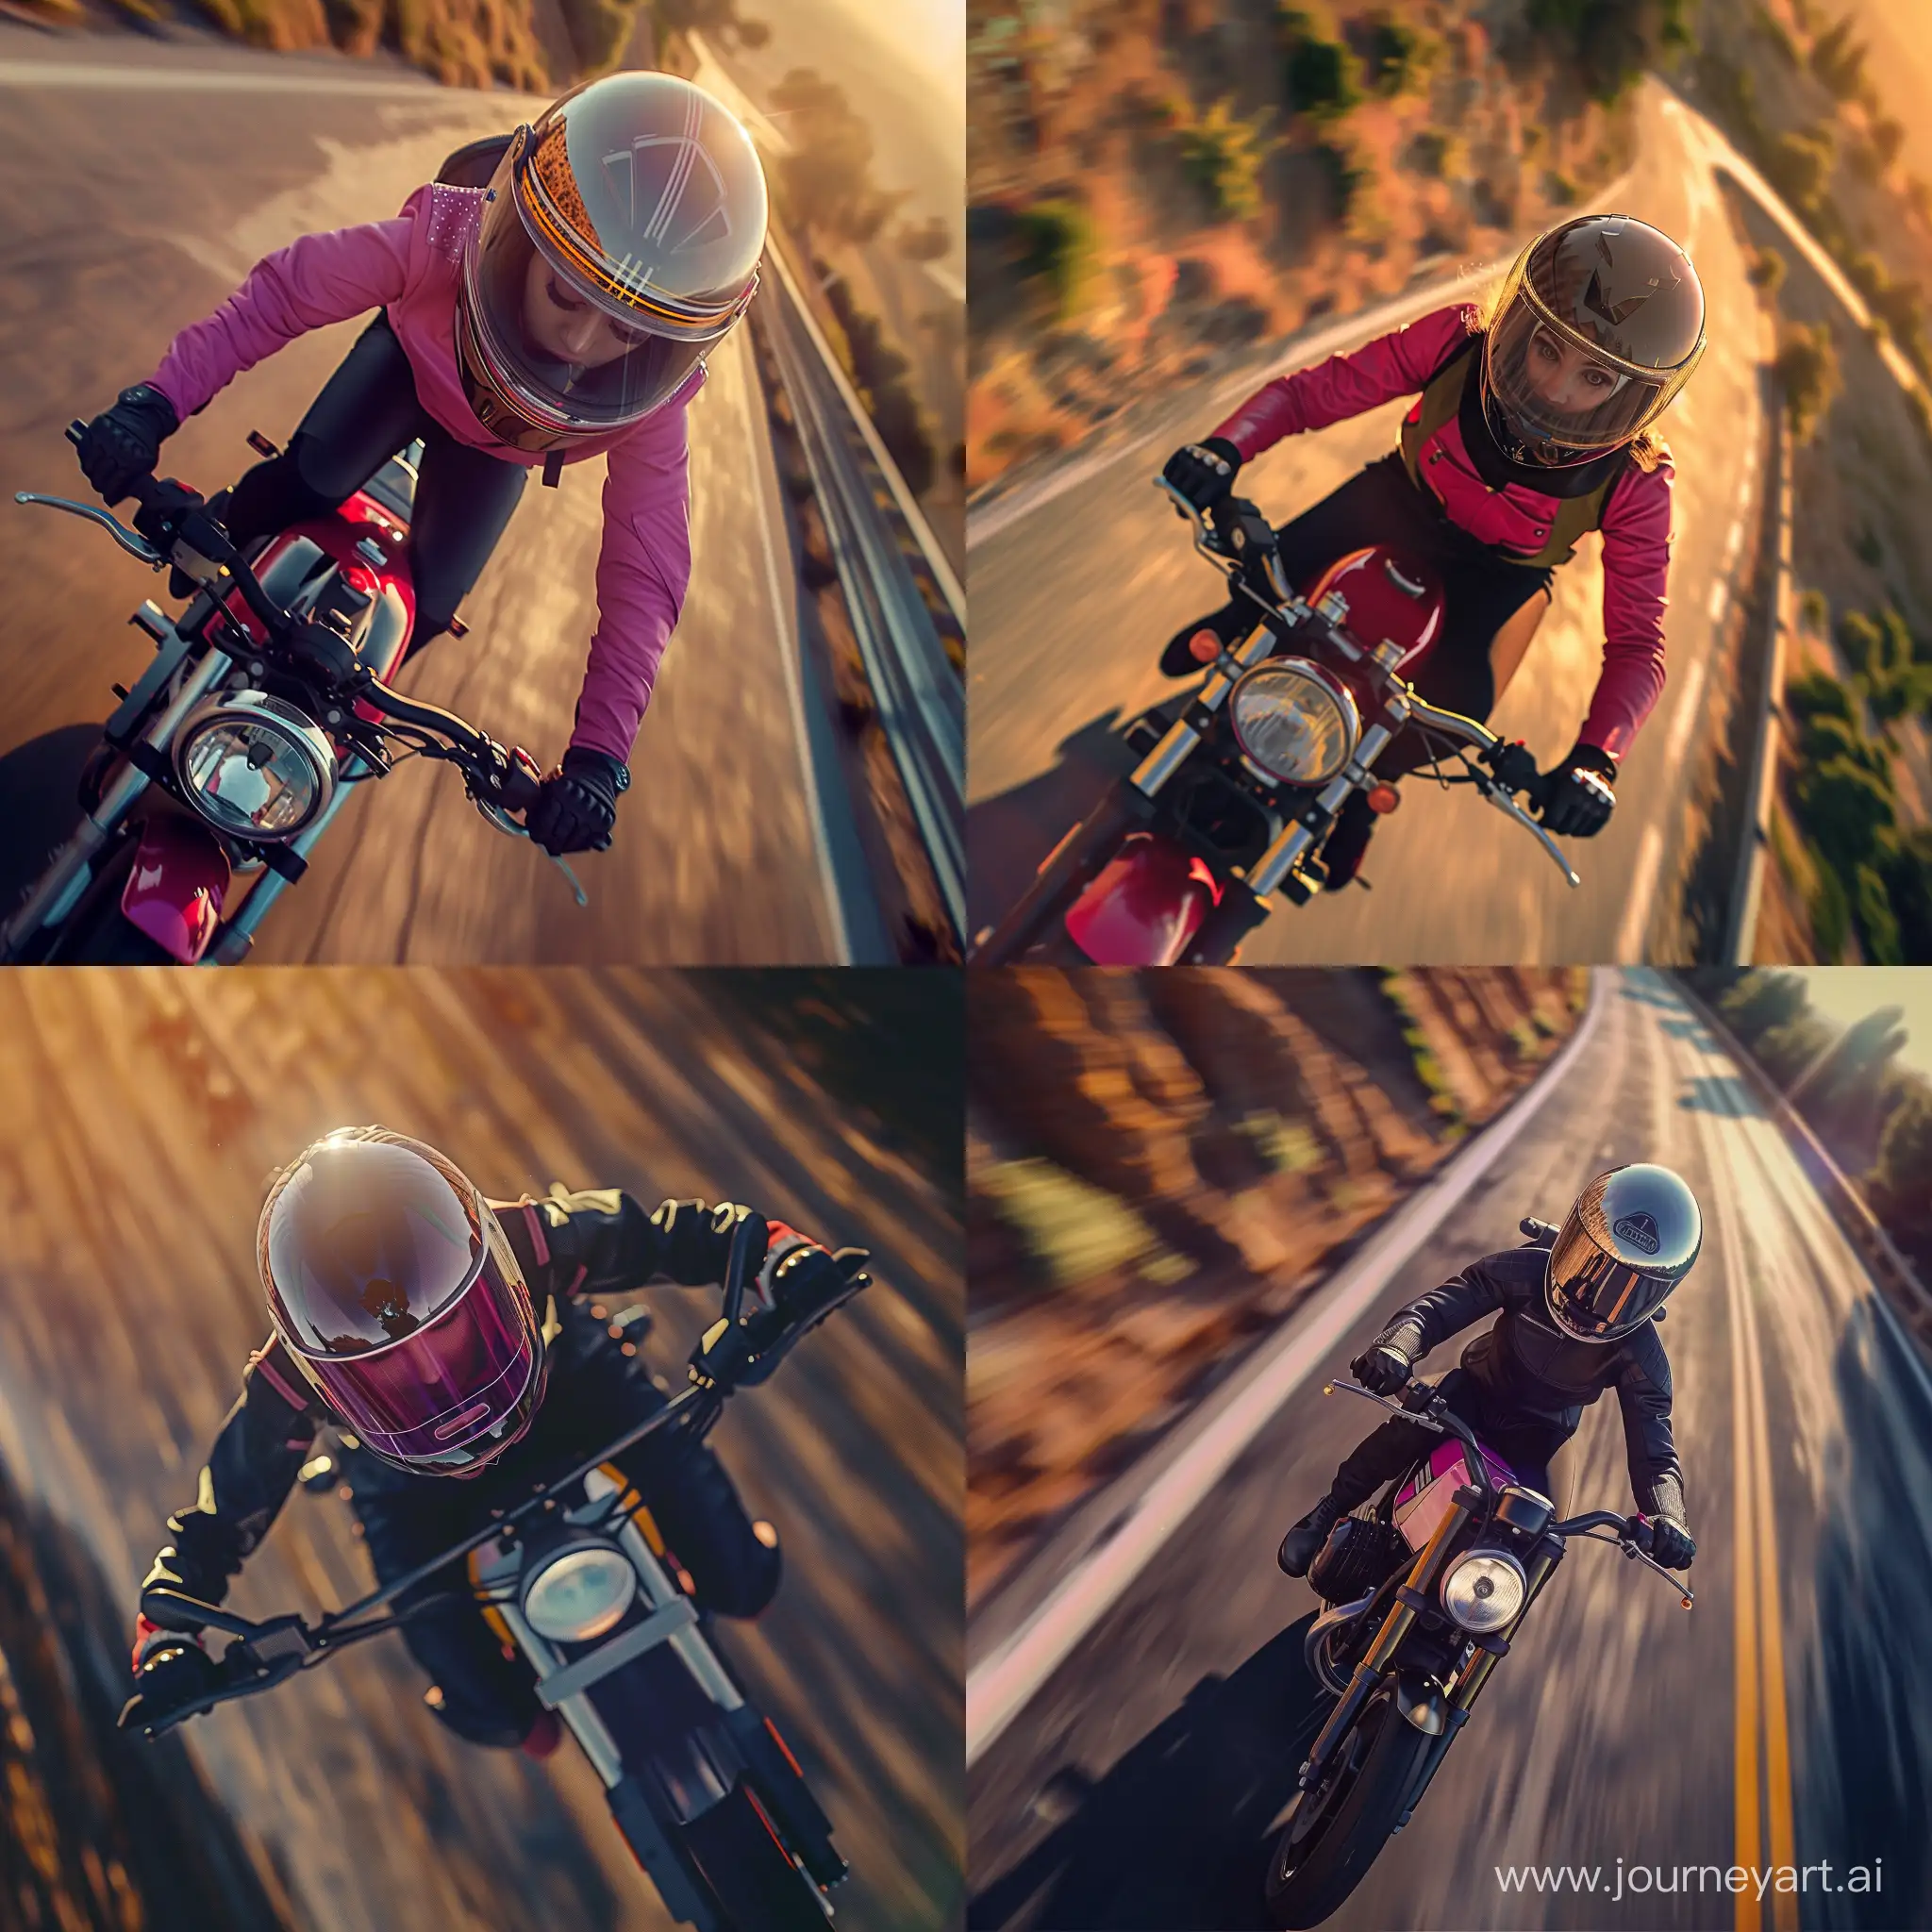 Futuristic-Muslimah-Riding-Translucent-Helmet-Motorcycle